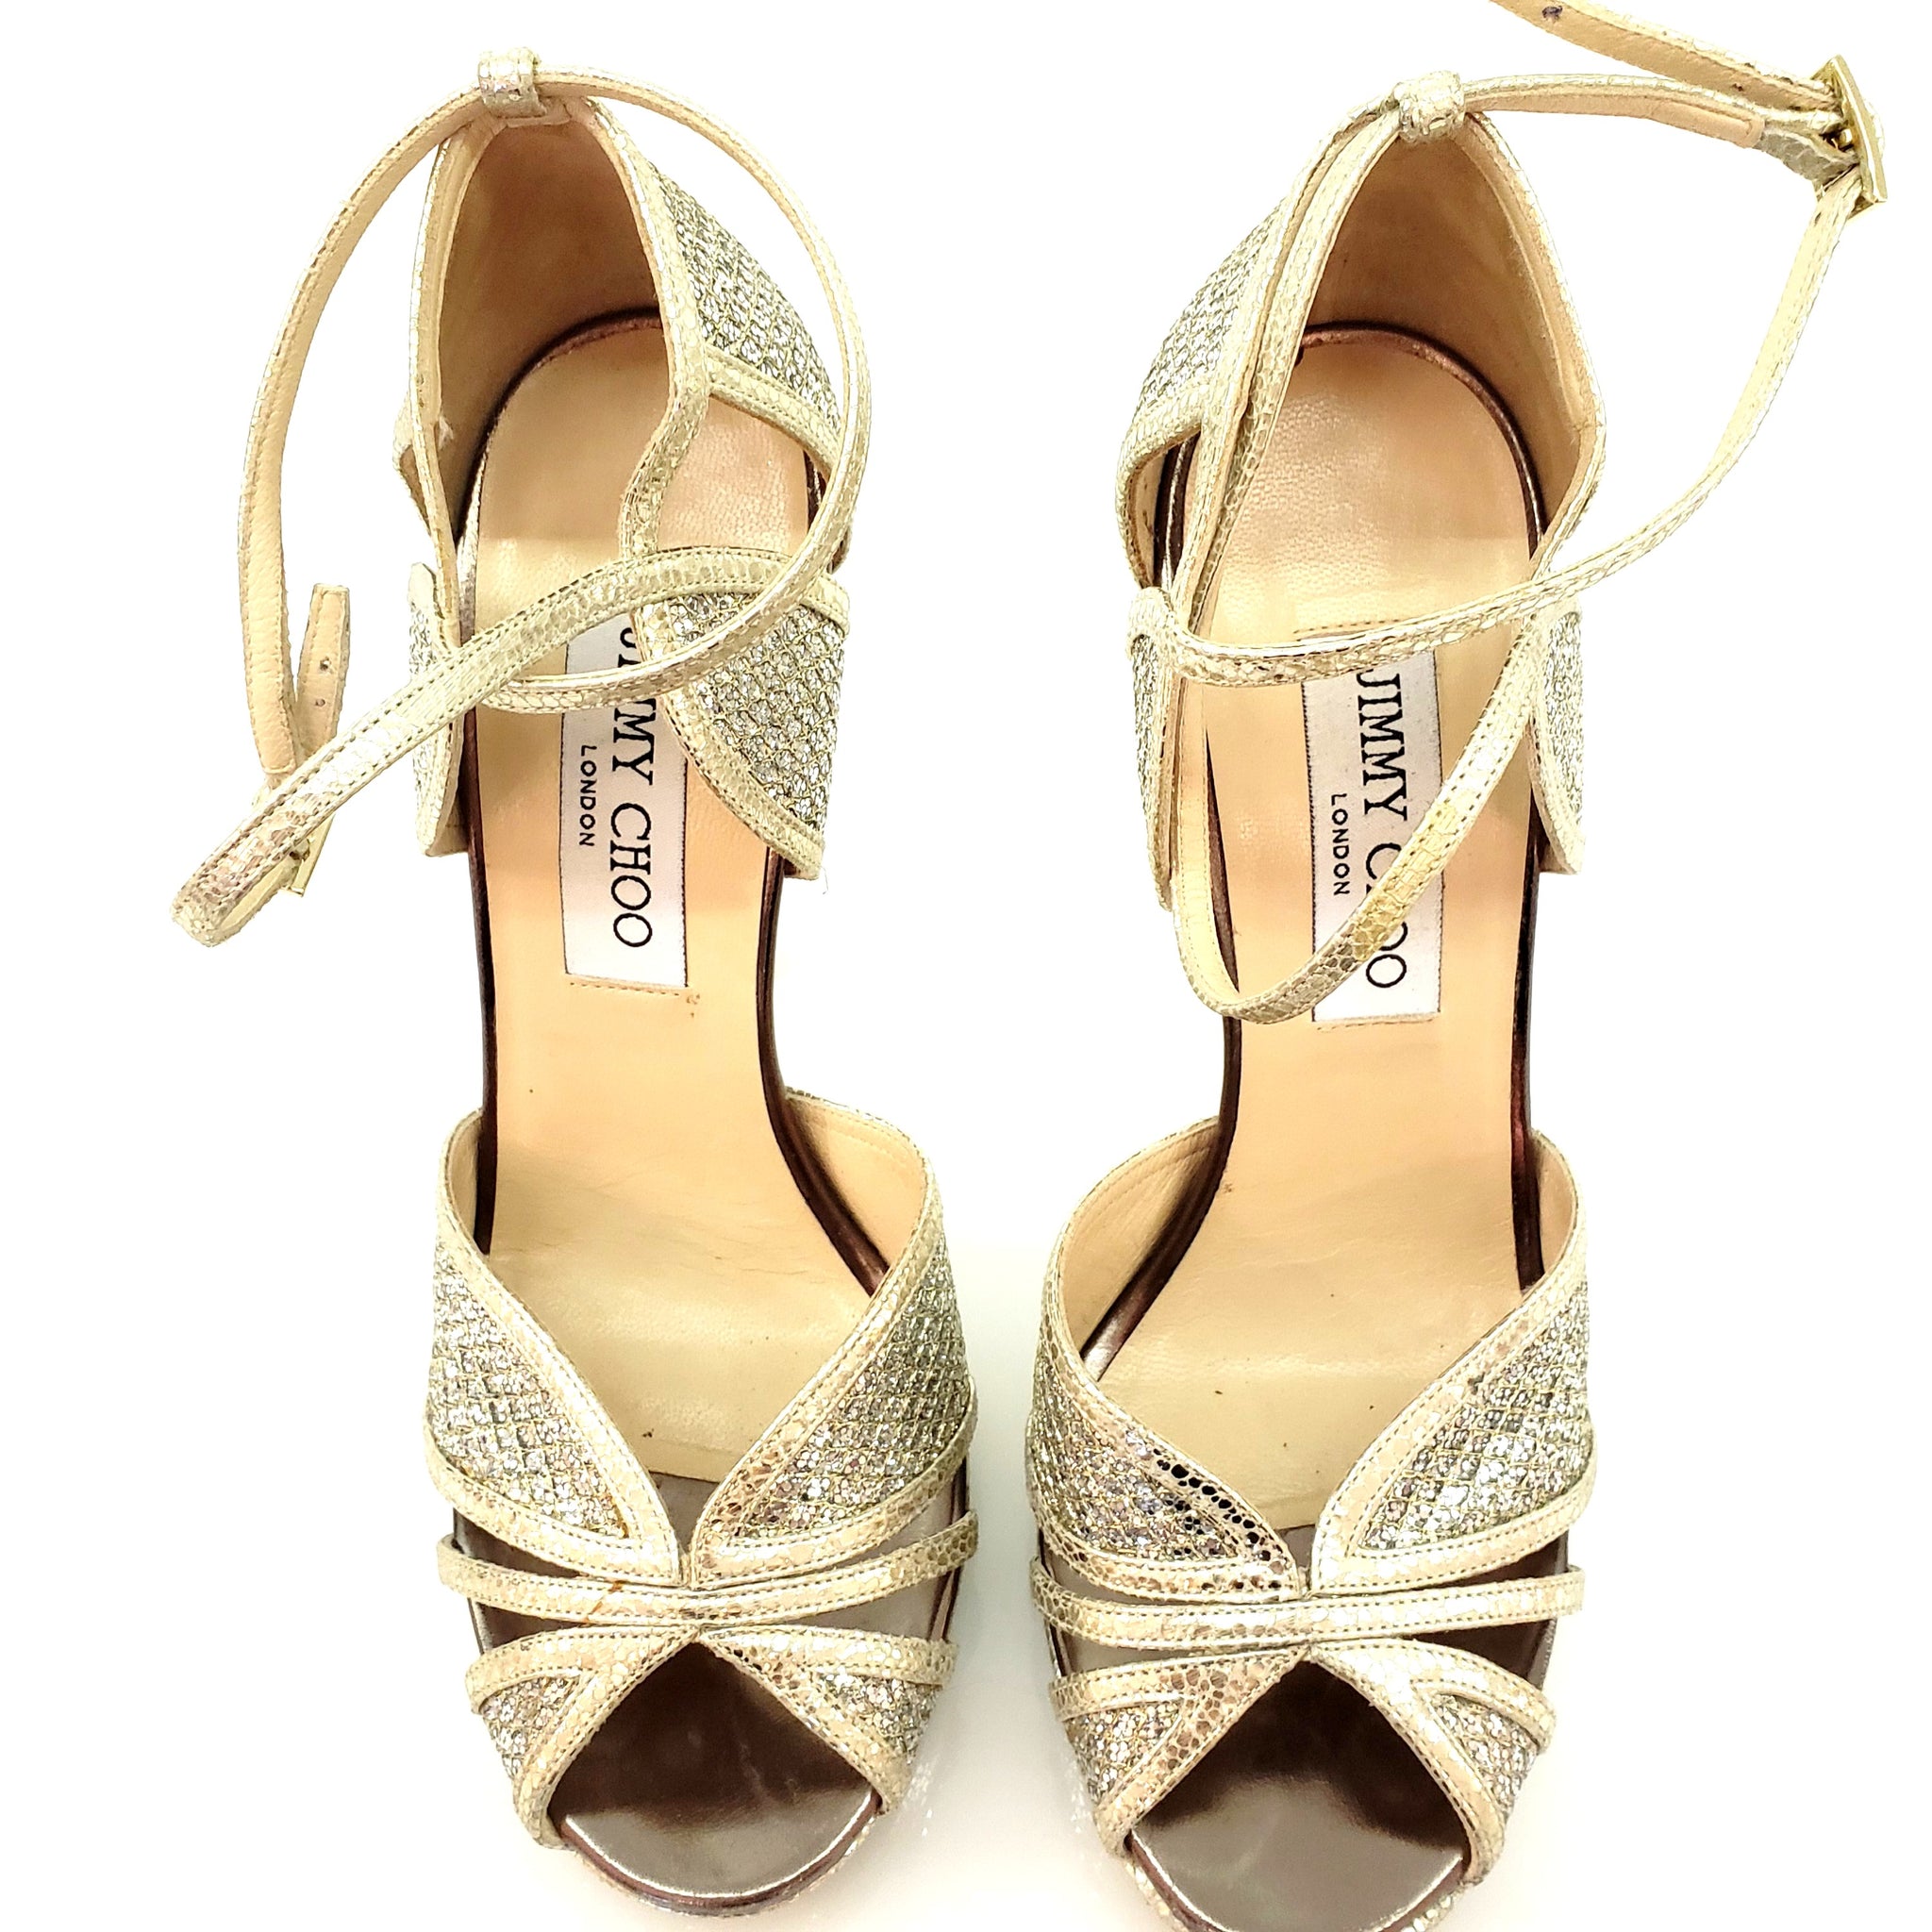 JIMMY CHOO: Azia sandals in satin - Fuchsia | JIMMY CHOO heeled sandals  AZIA95SAT online at GIGLIO.COM